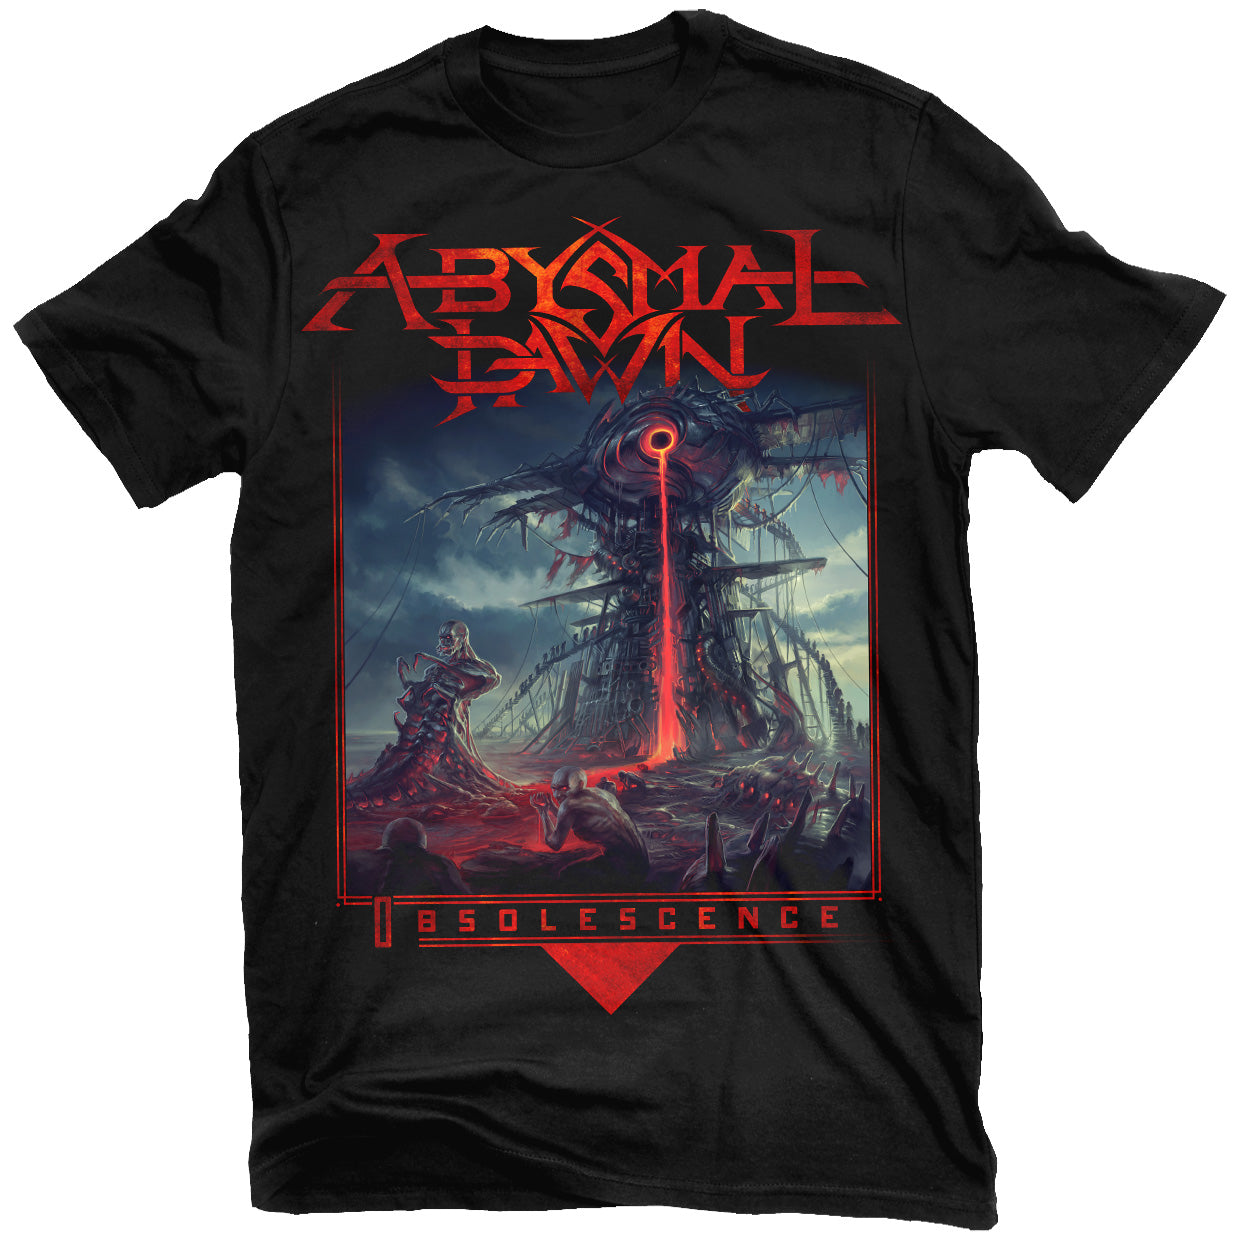 Abysmal Dawn "Obsolescence" T-Shirt